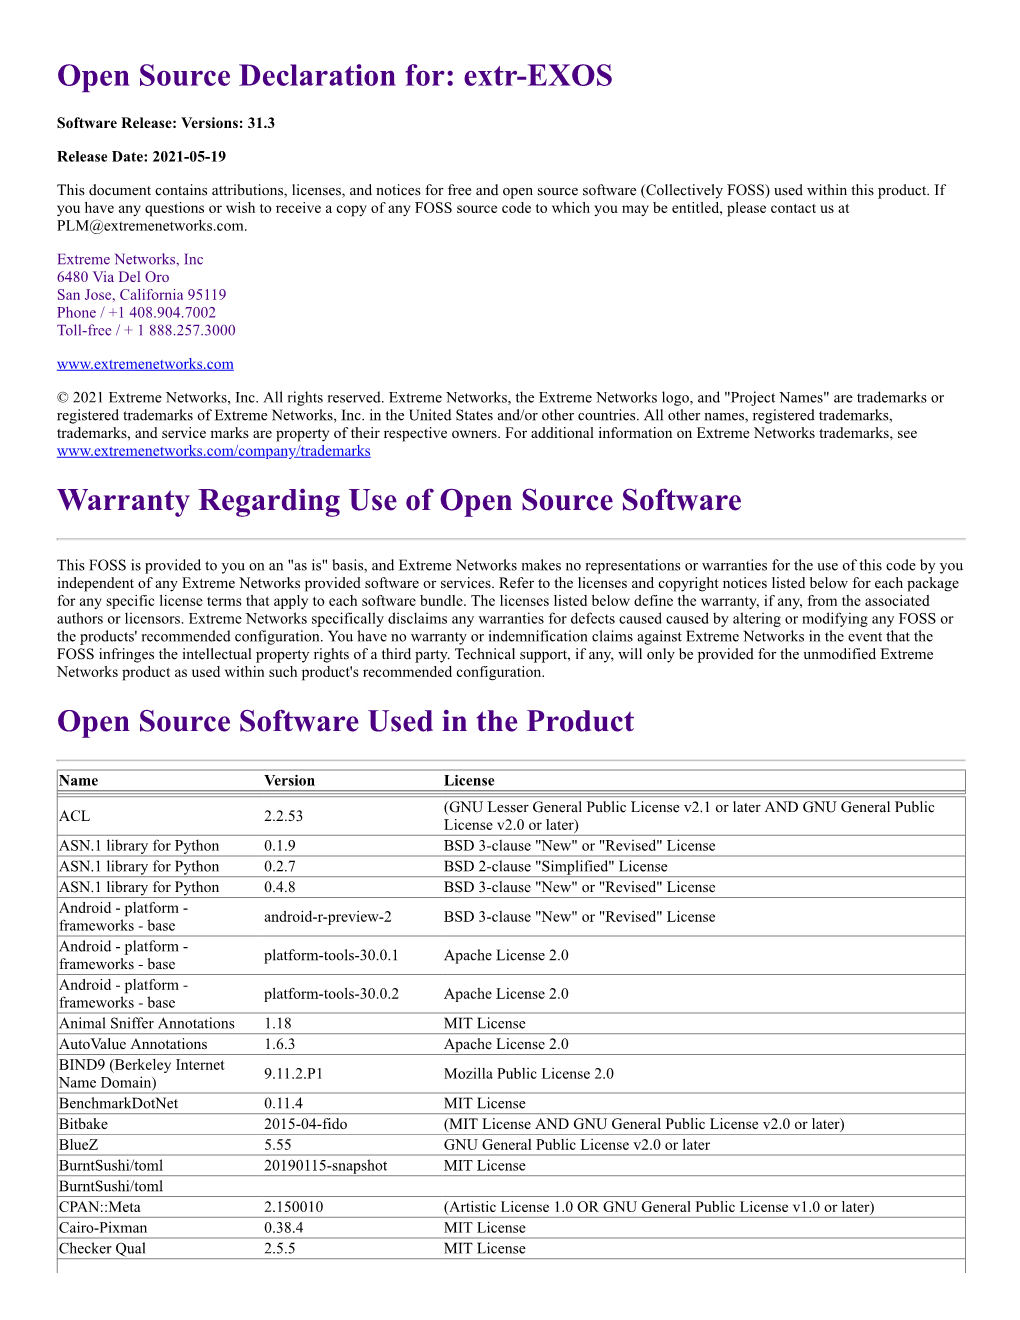 Open Source Declaration For: Extr-EXOS Warranty Regarding Use